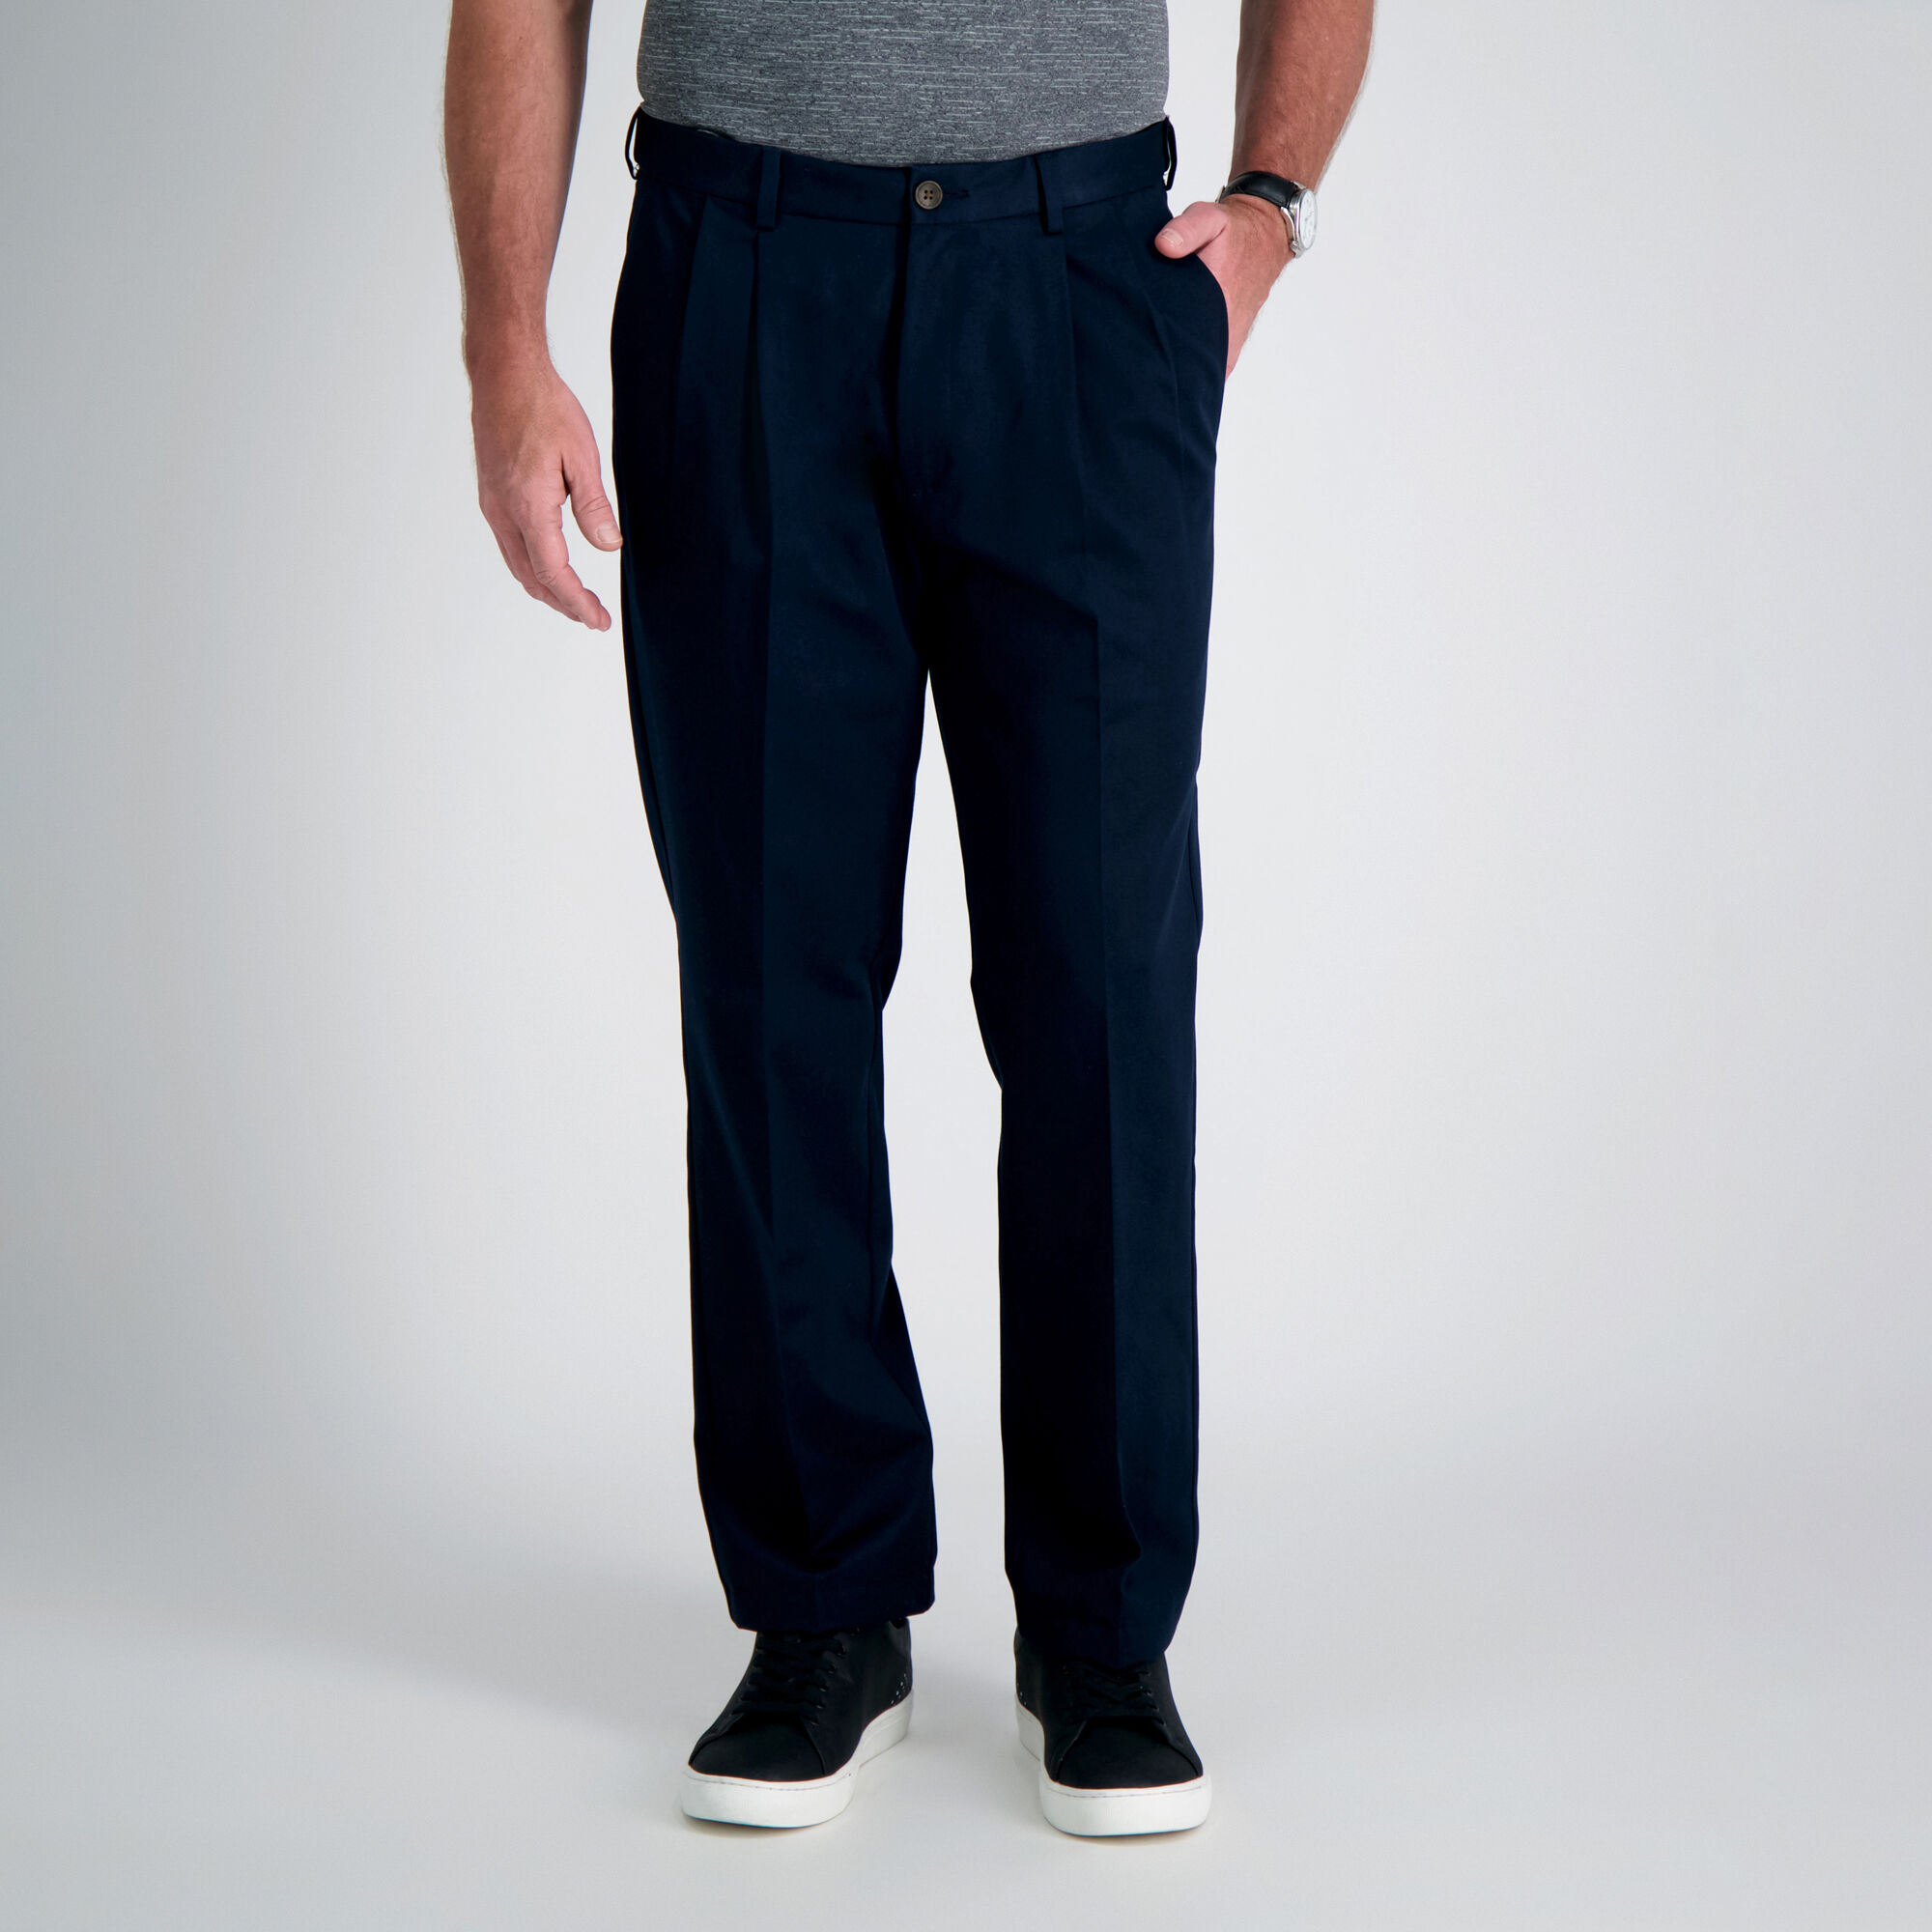 Men's Classic Fit Pants - Classic Fit Pant Styles | Haggar